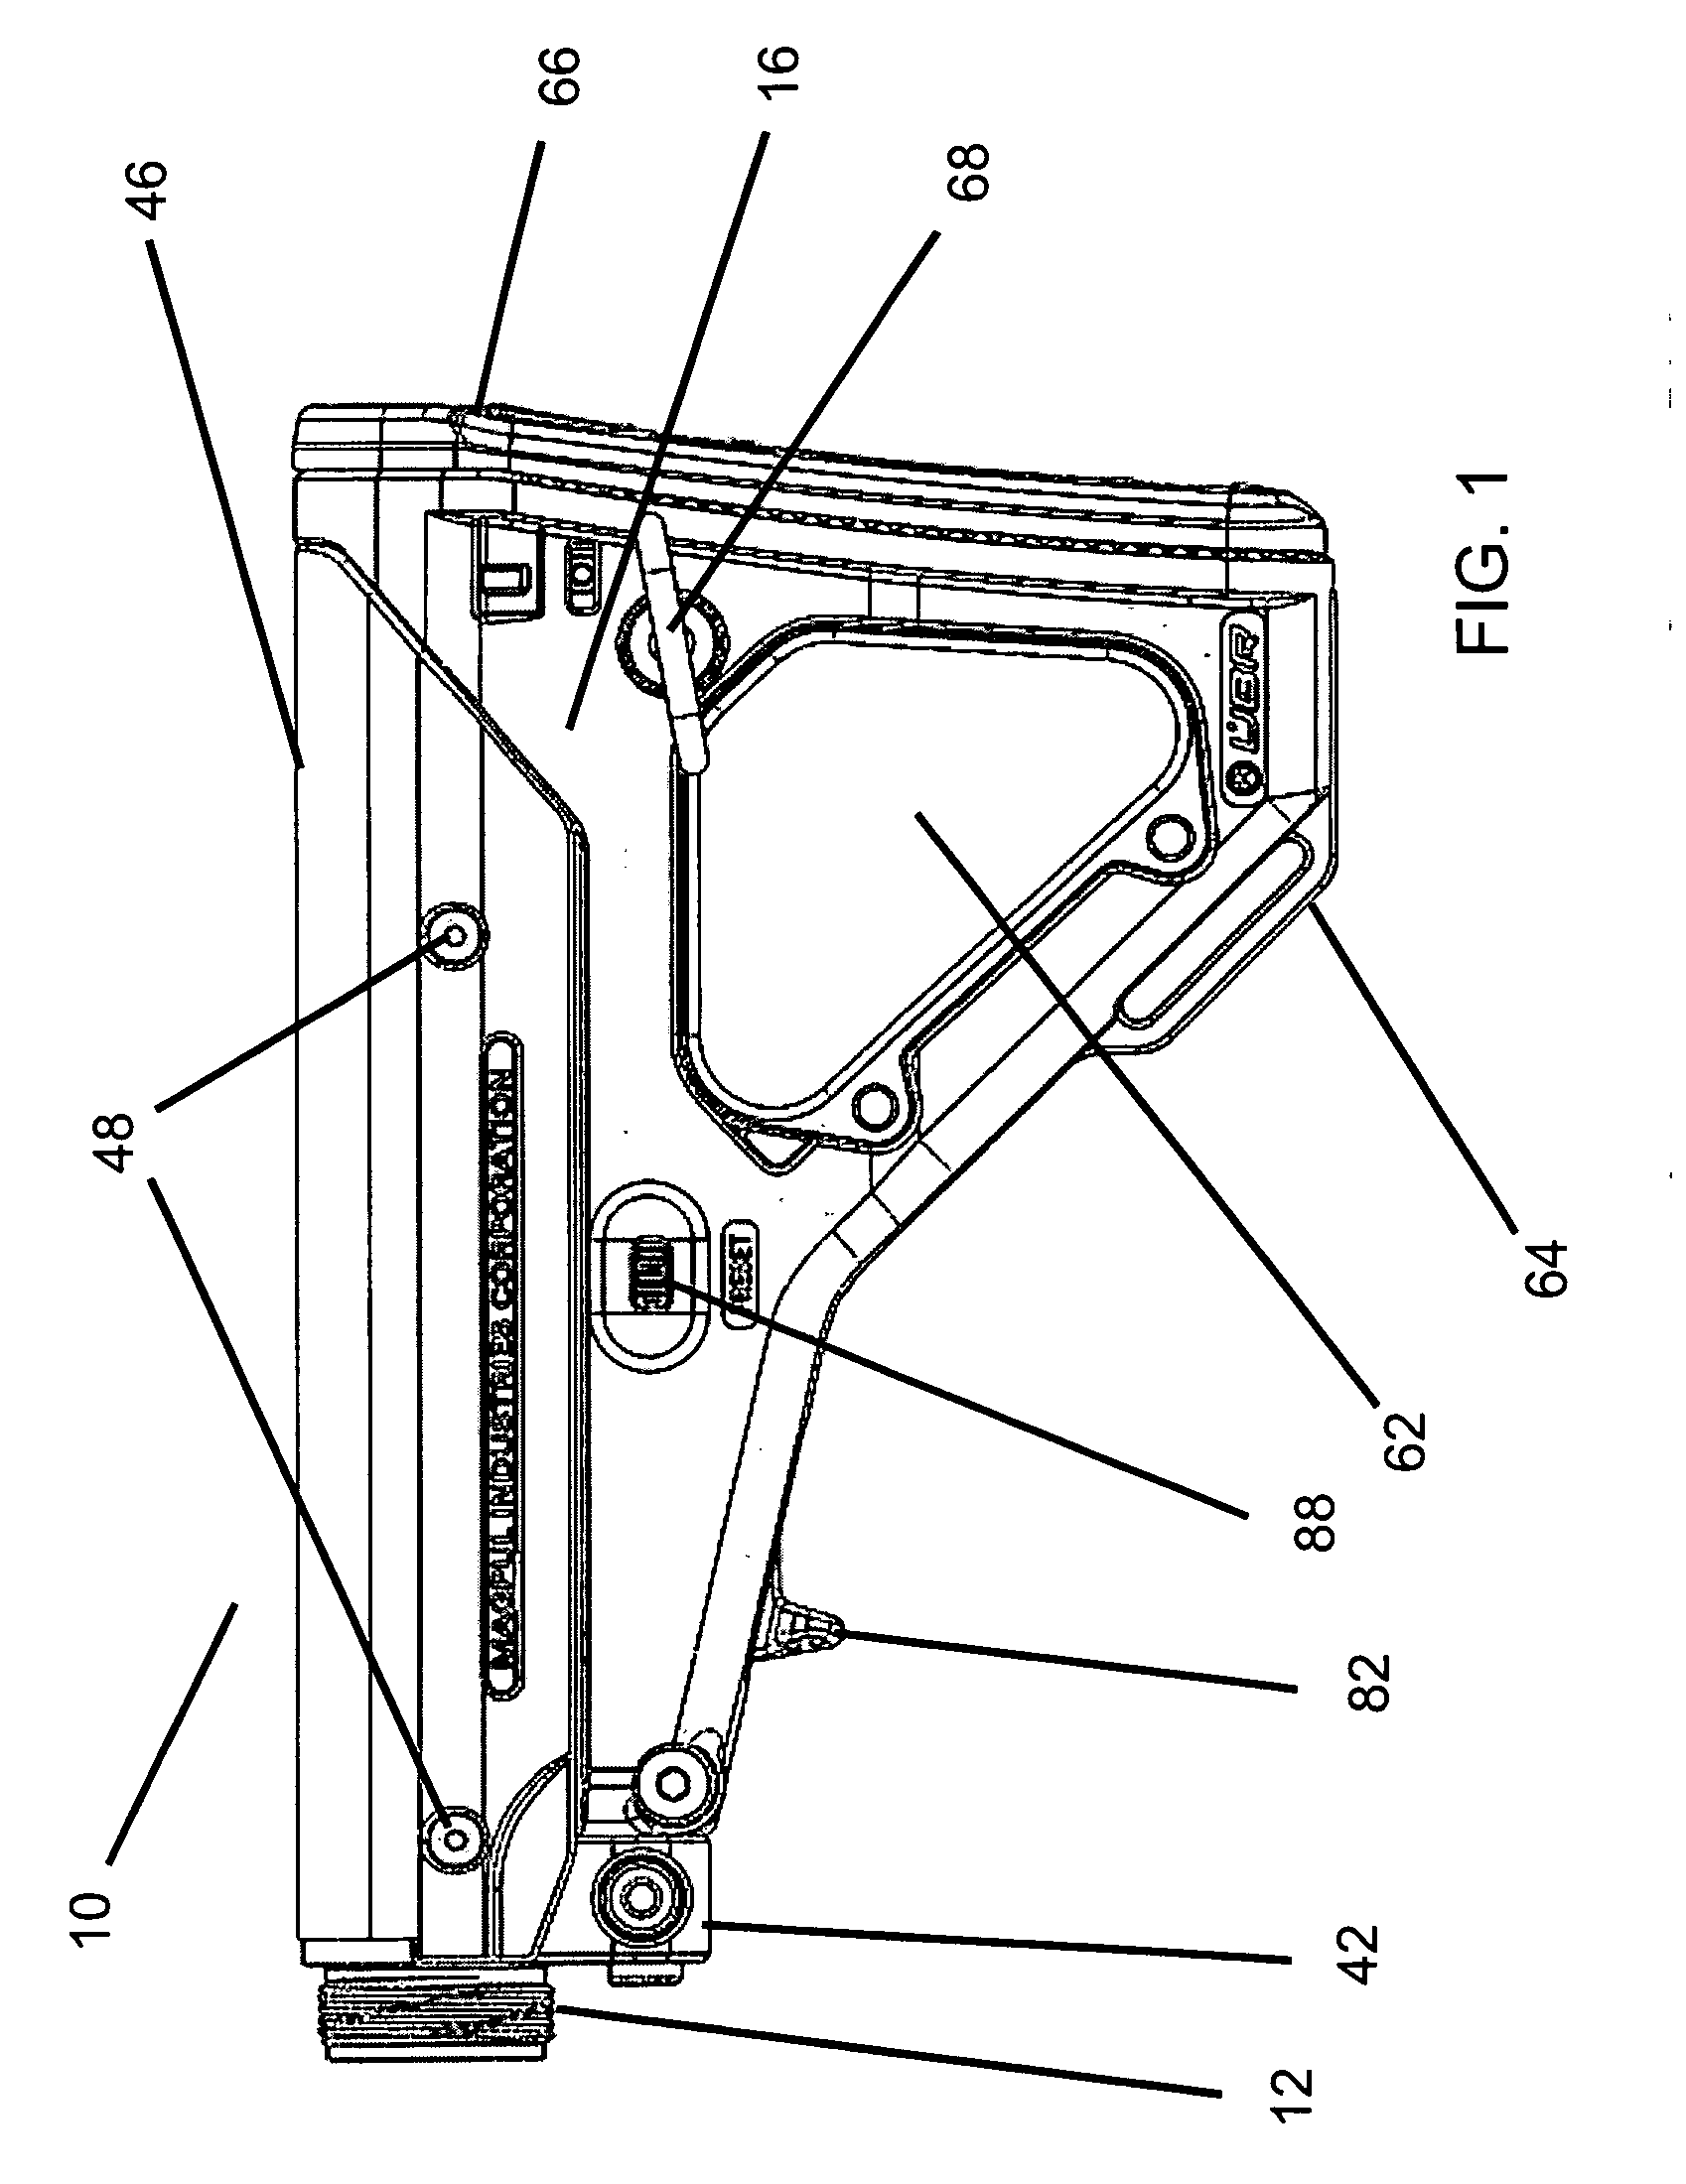 Modular gunstock